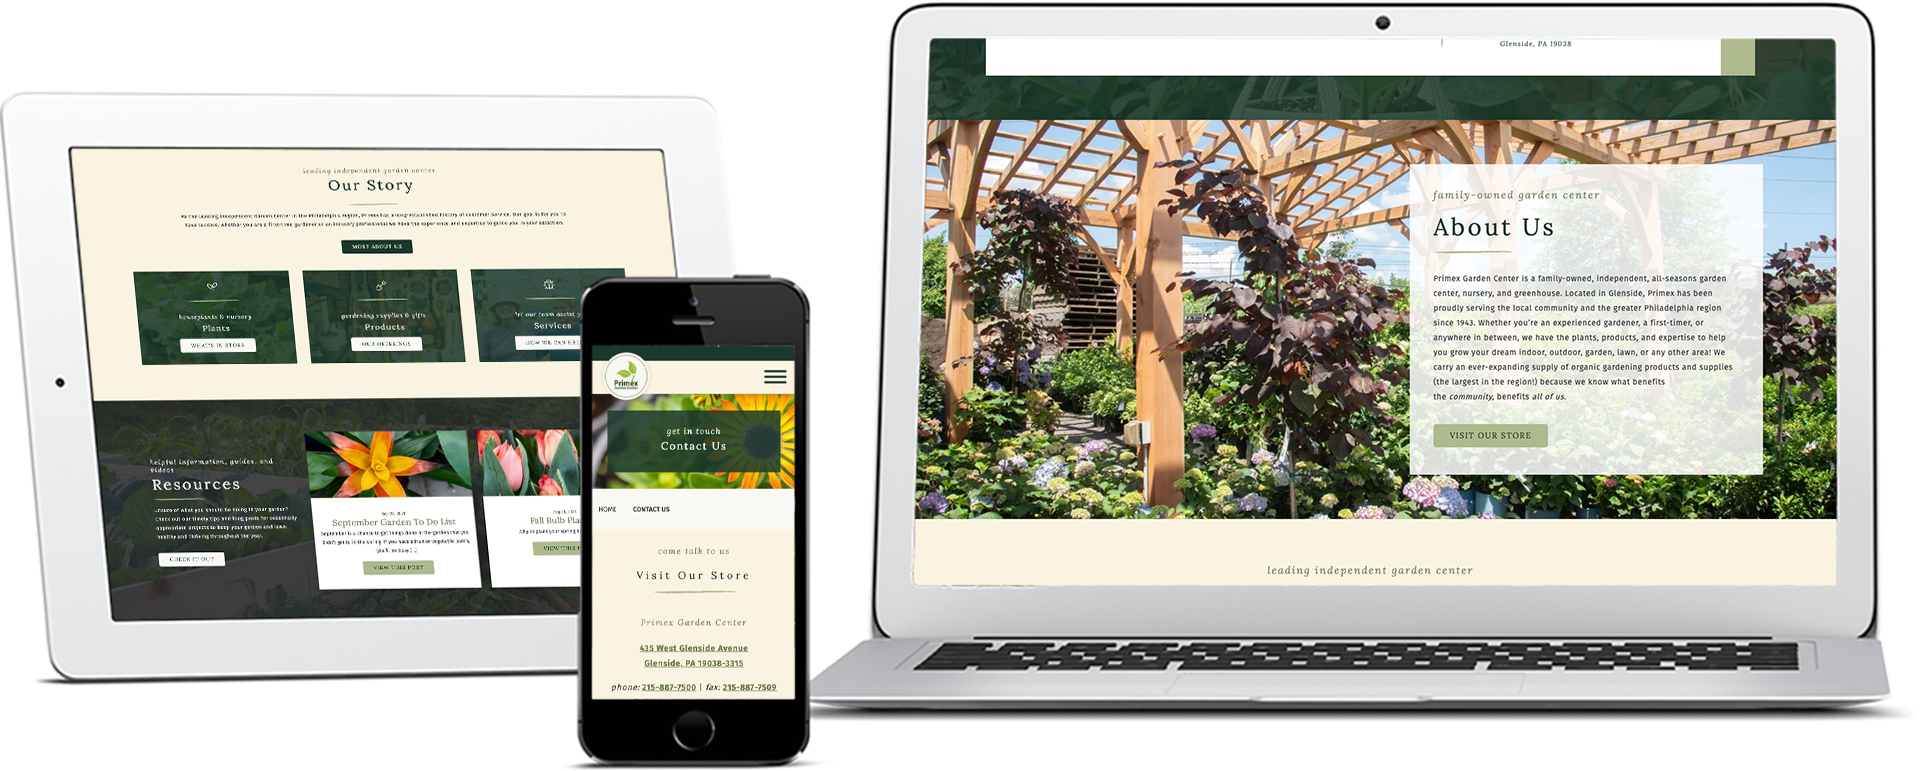 Primex Garden Center website mockup on devices